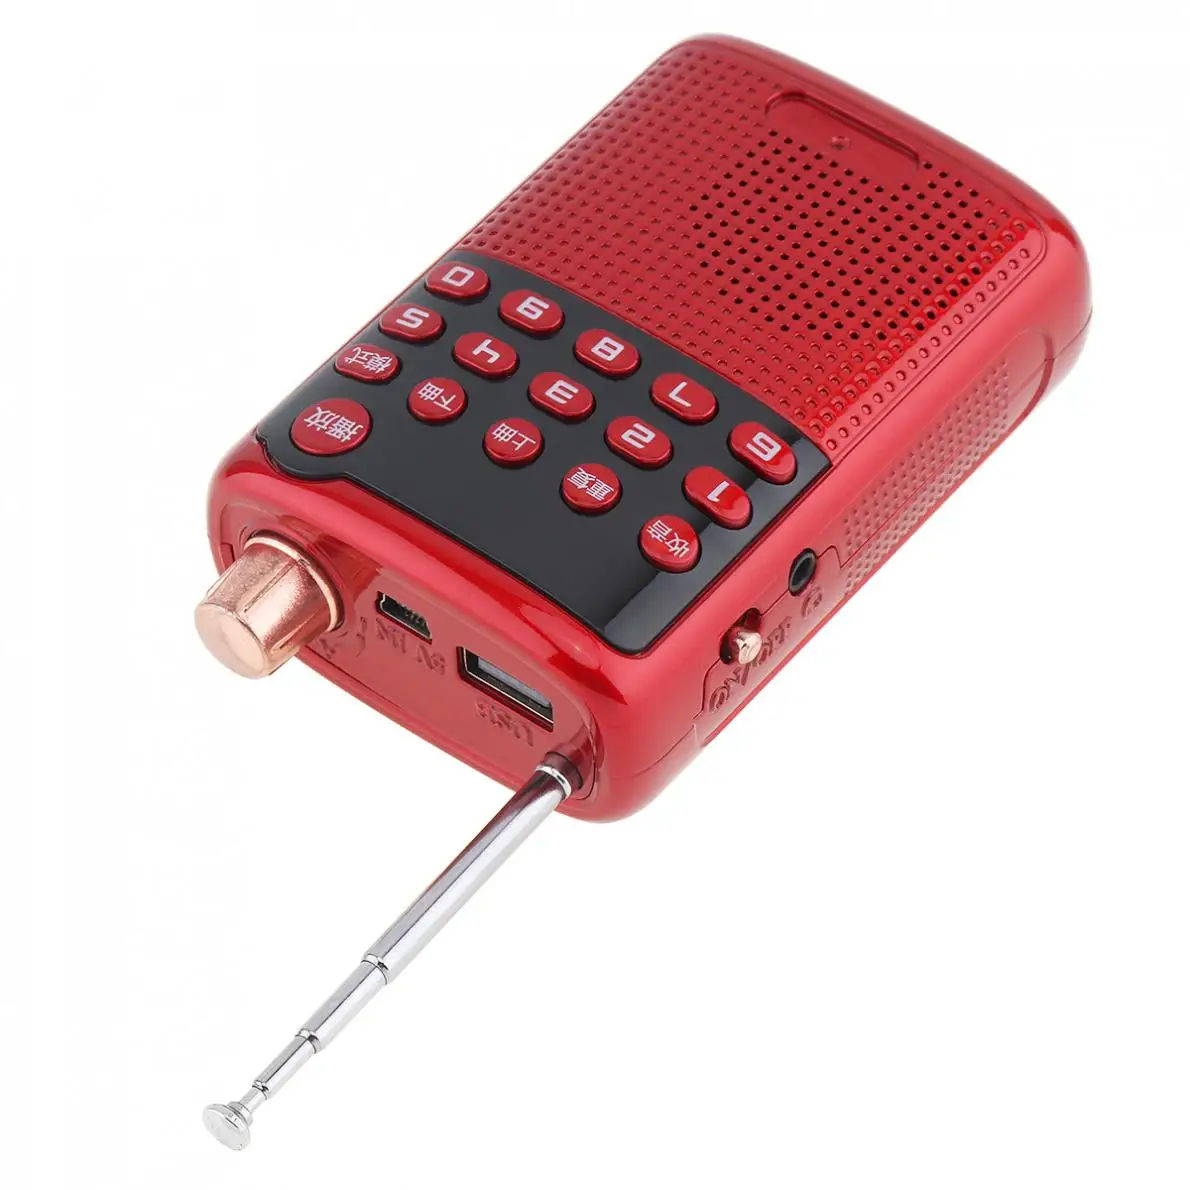 E55 Radio Portátil Mini Tarjeta de Audio del Altavoz de la Radio de FM con Cargador USB Auriculares de 3,5 mm Jack para el Hogar /al aire libre de Alta Calidad 3